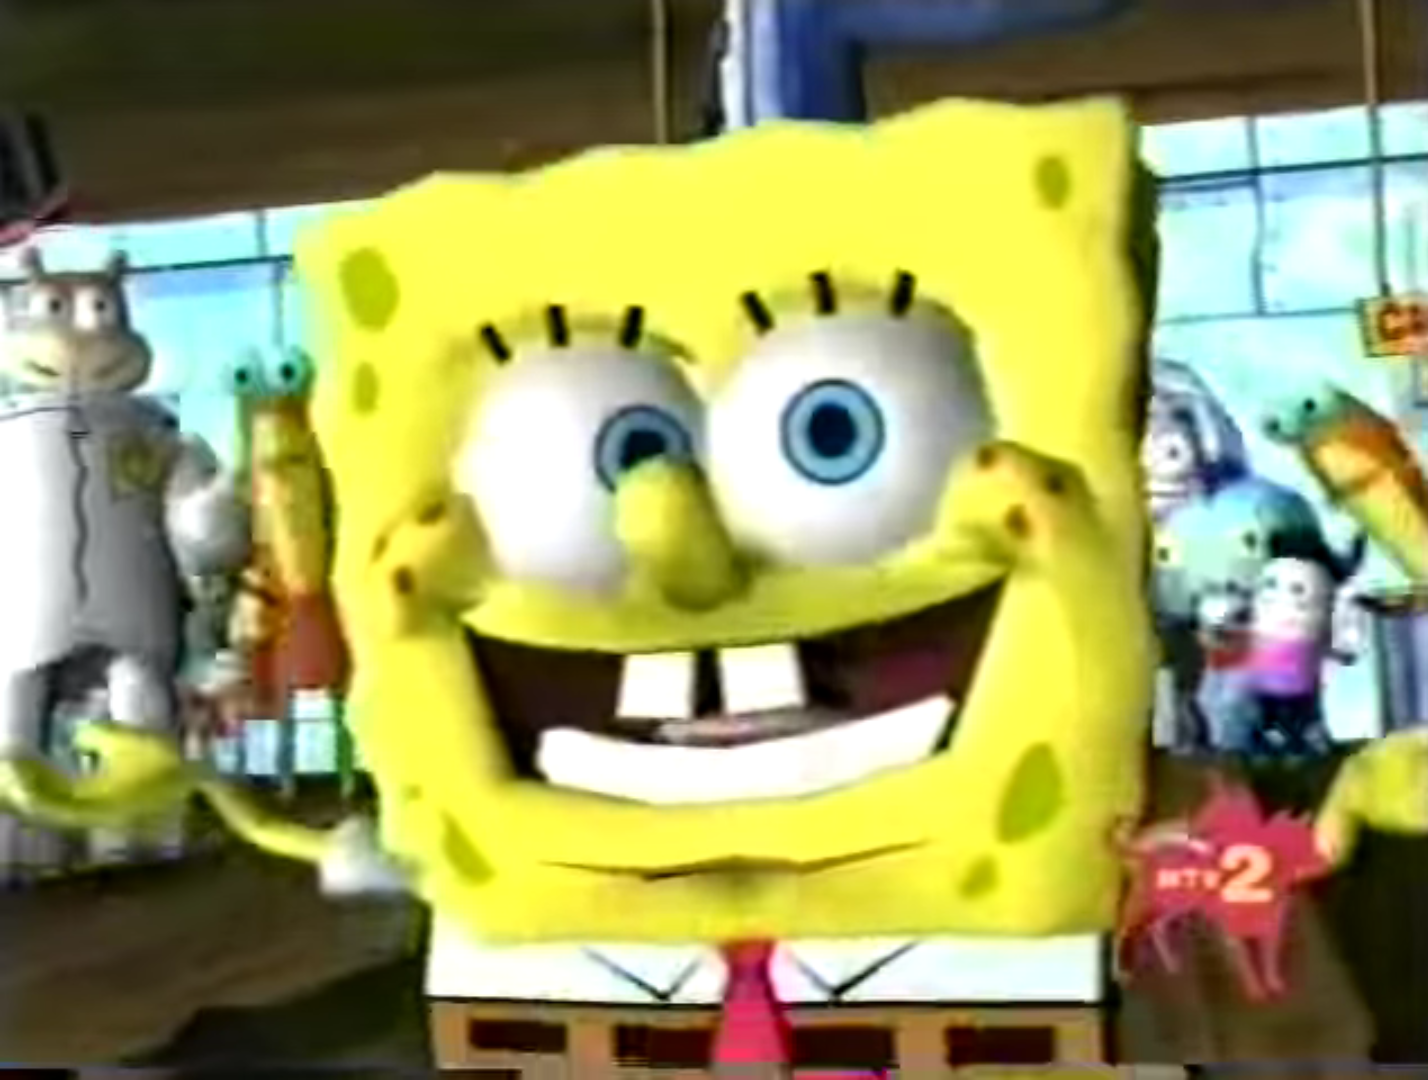 Spongebob Blink-182 MTV Video Mod - Video Mods (partially lost MTV2 TV series; 2005)